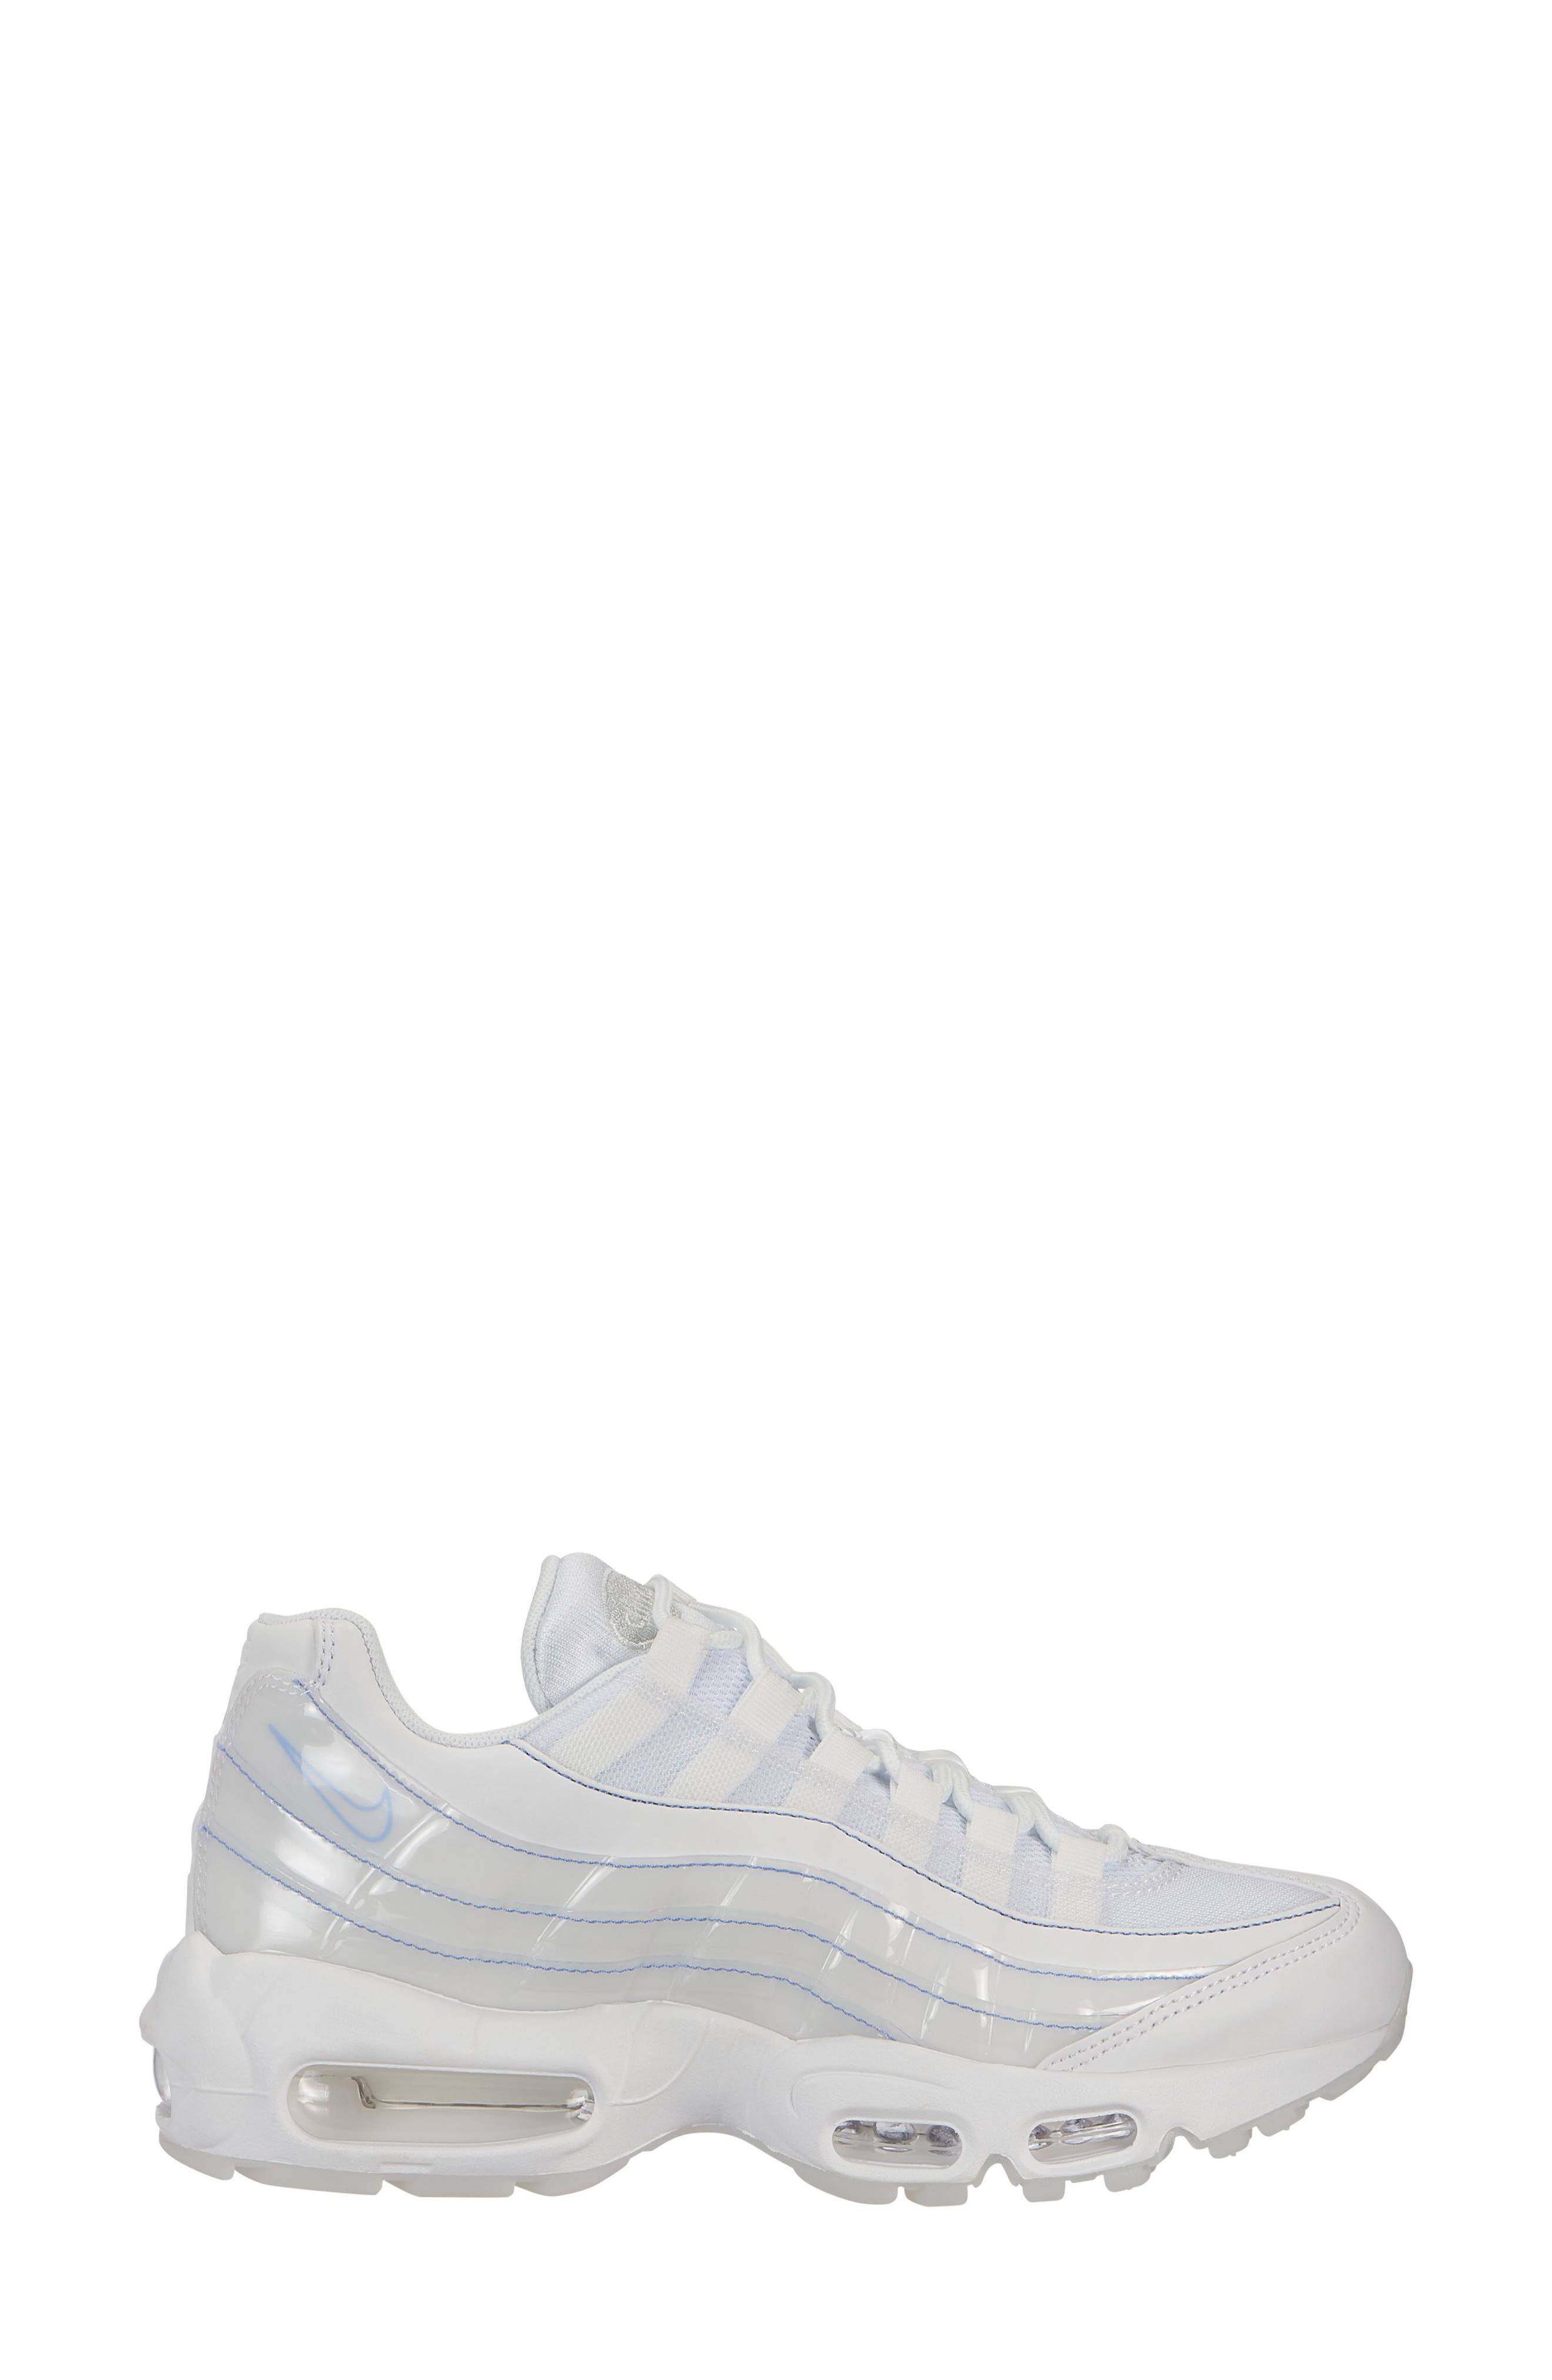 Nike Air Max 95 SE Running Shoe (Women 